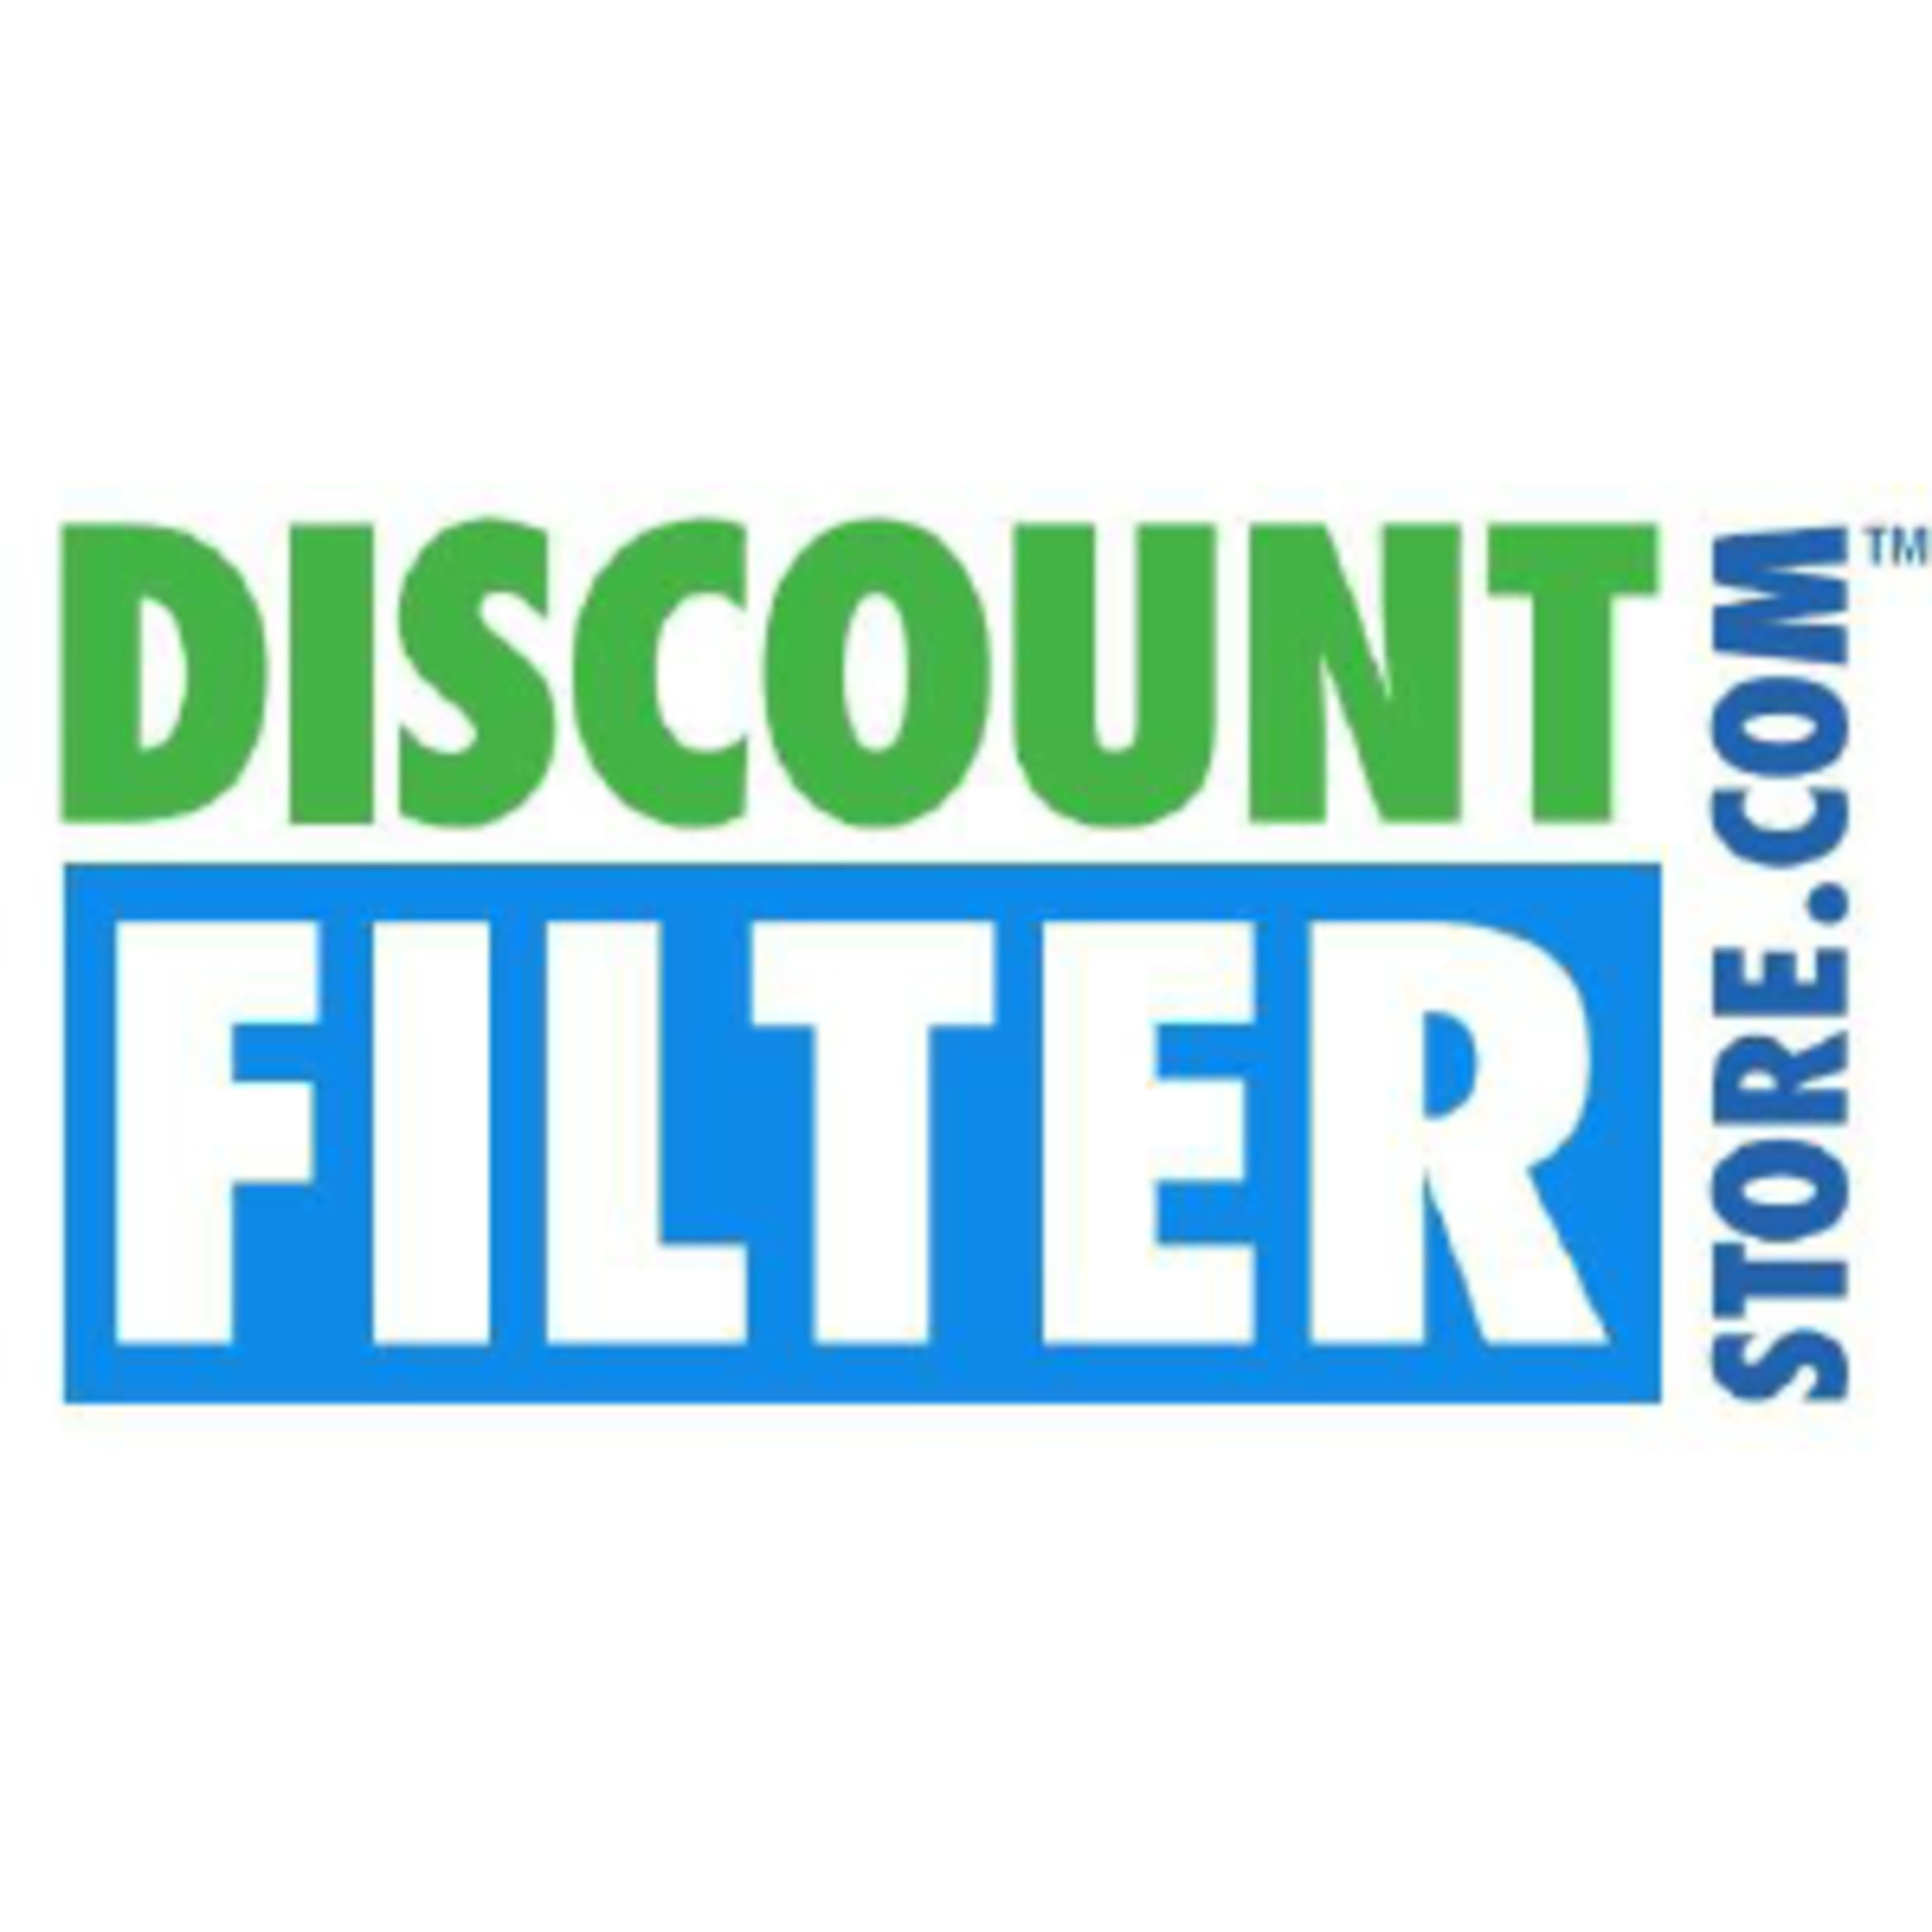 Discount Filter StoreCode